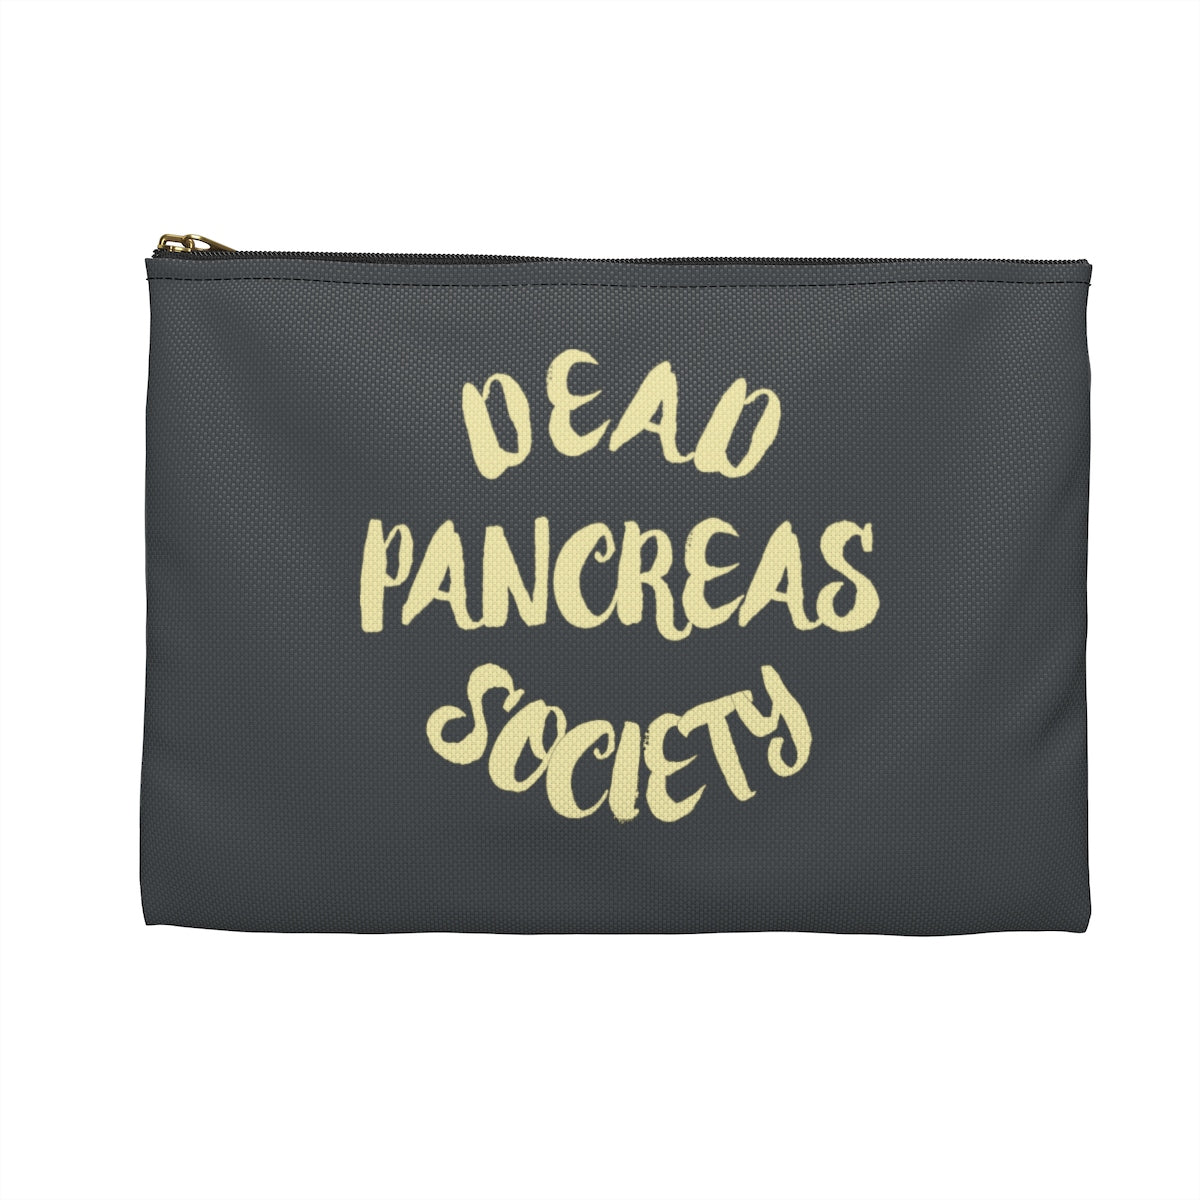 Dead Pancreas Society Bag, Diabetes Supply Bag, Fun Diabetic Supply Case, Cute Carrying Case Gift, Type 1 Diabetes Accessory Zipper Pouch Bag Starcove Fashion